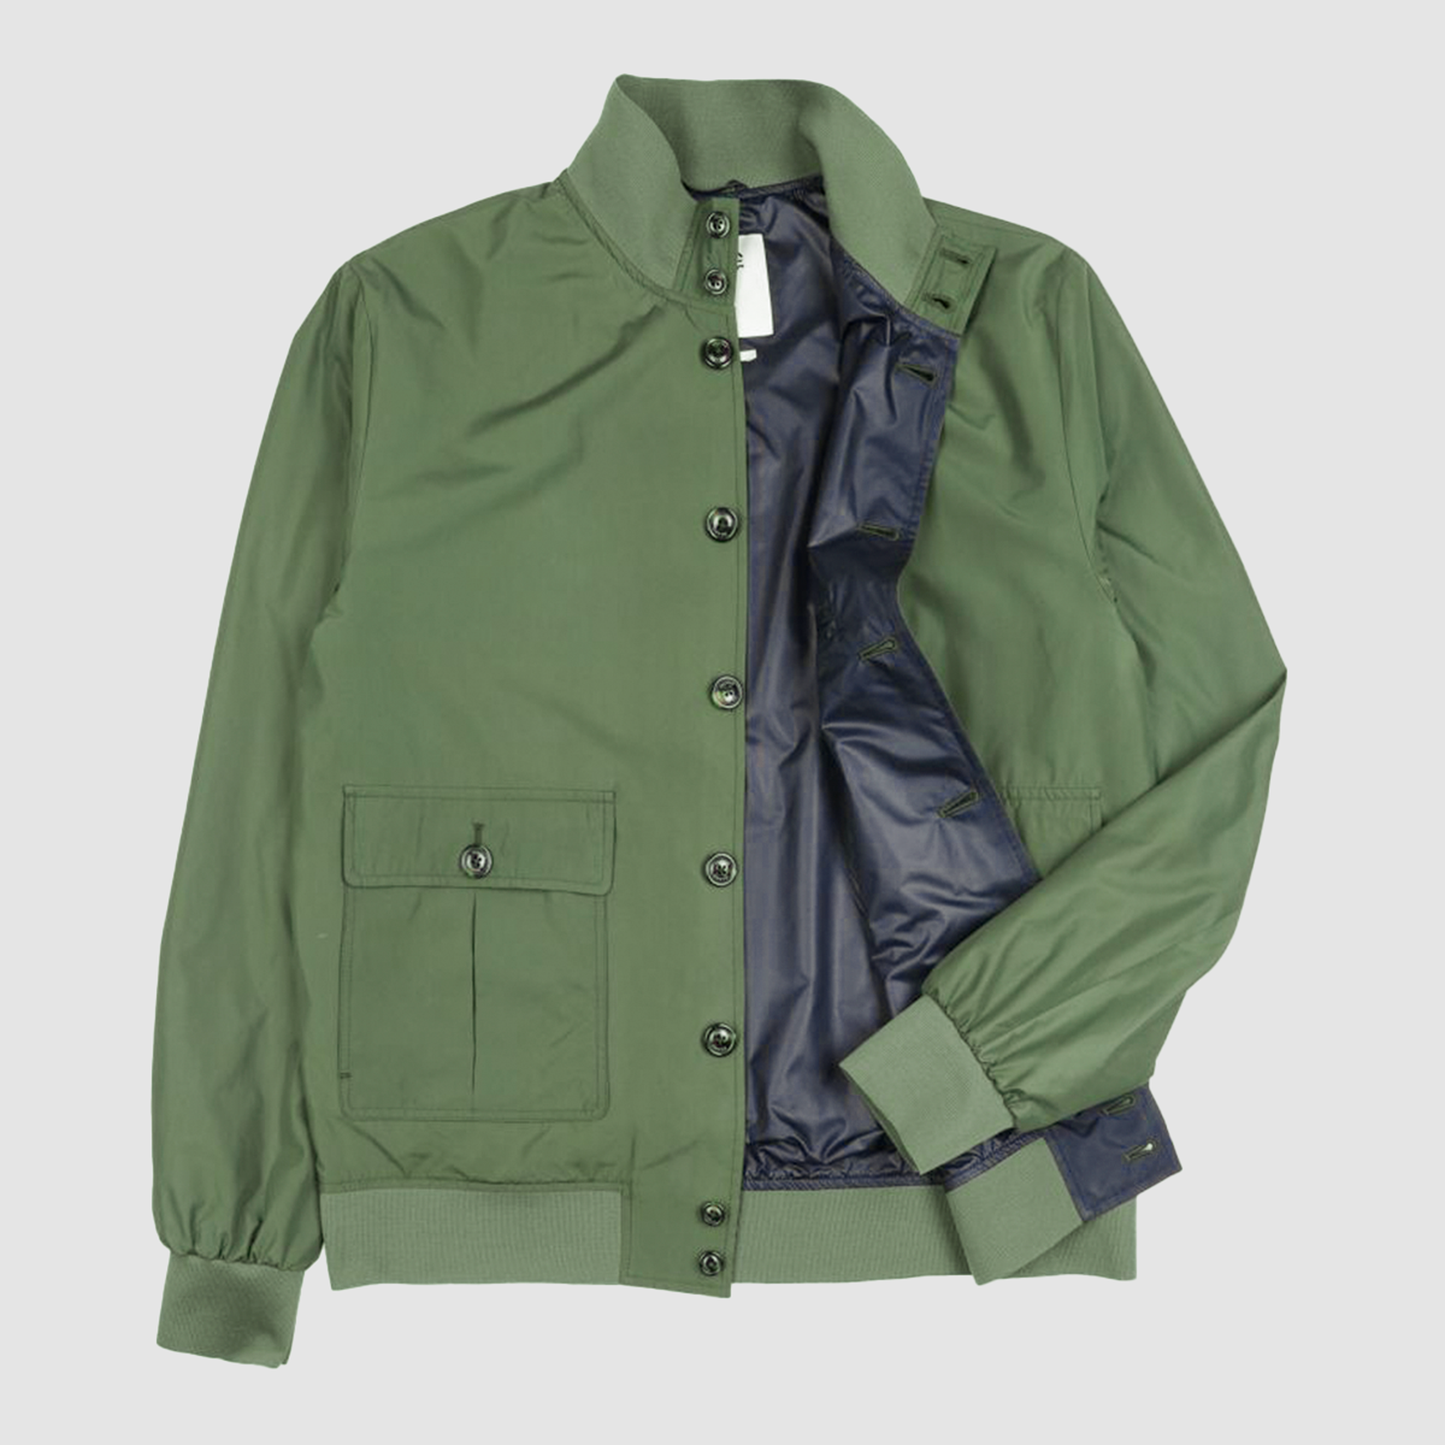 Valstarino Packable Jacket, Water-Repellent in Super Light Fabric - Green